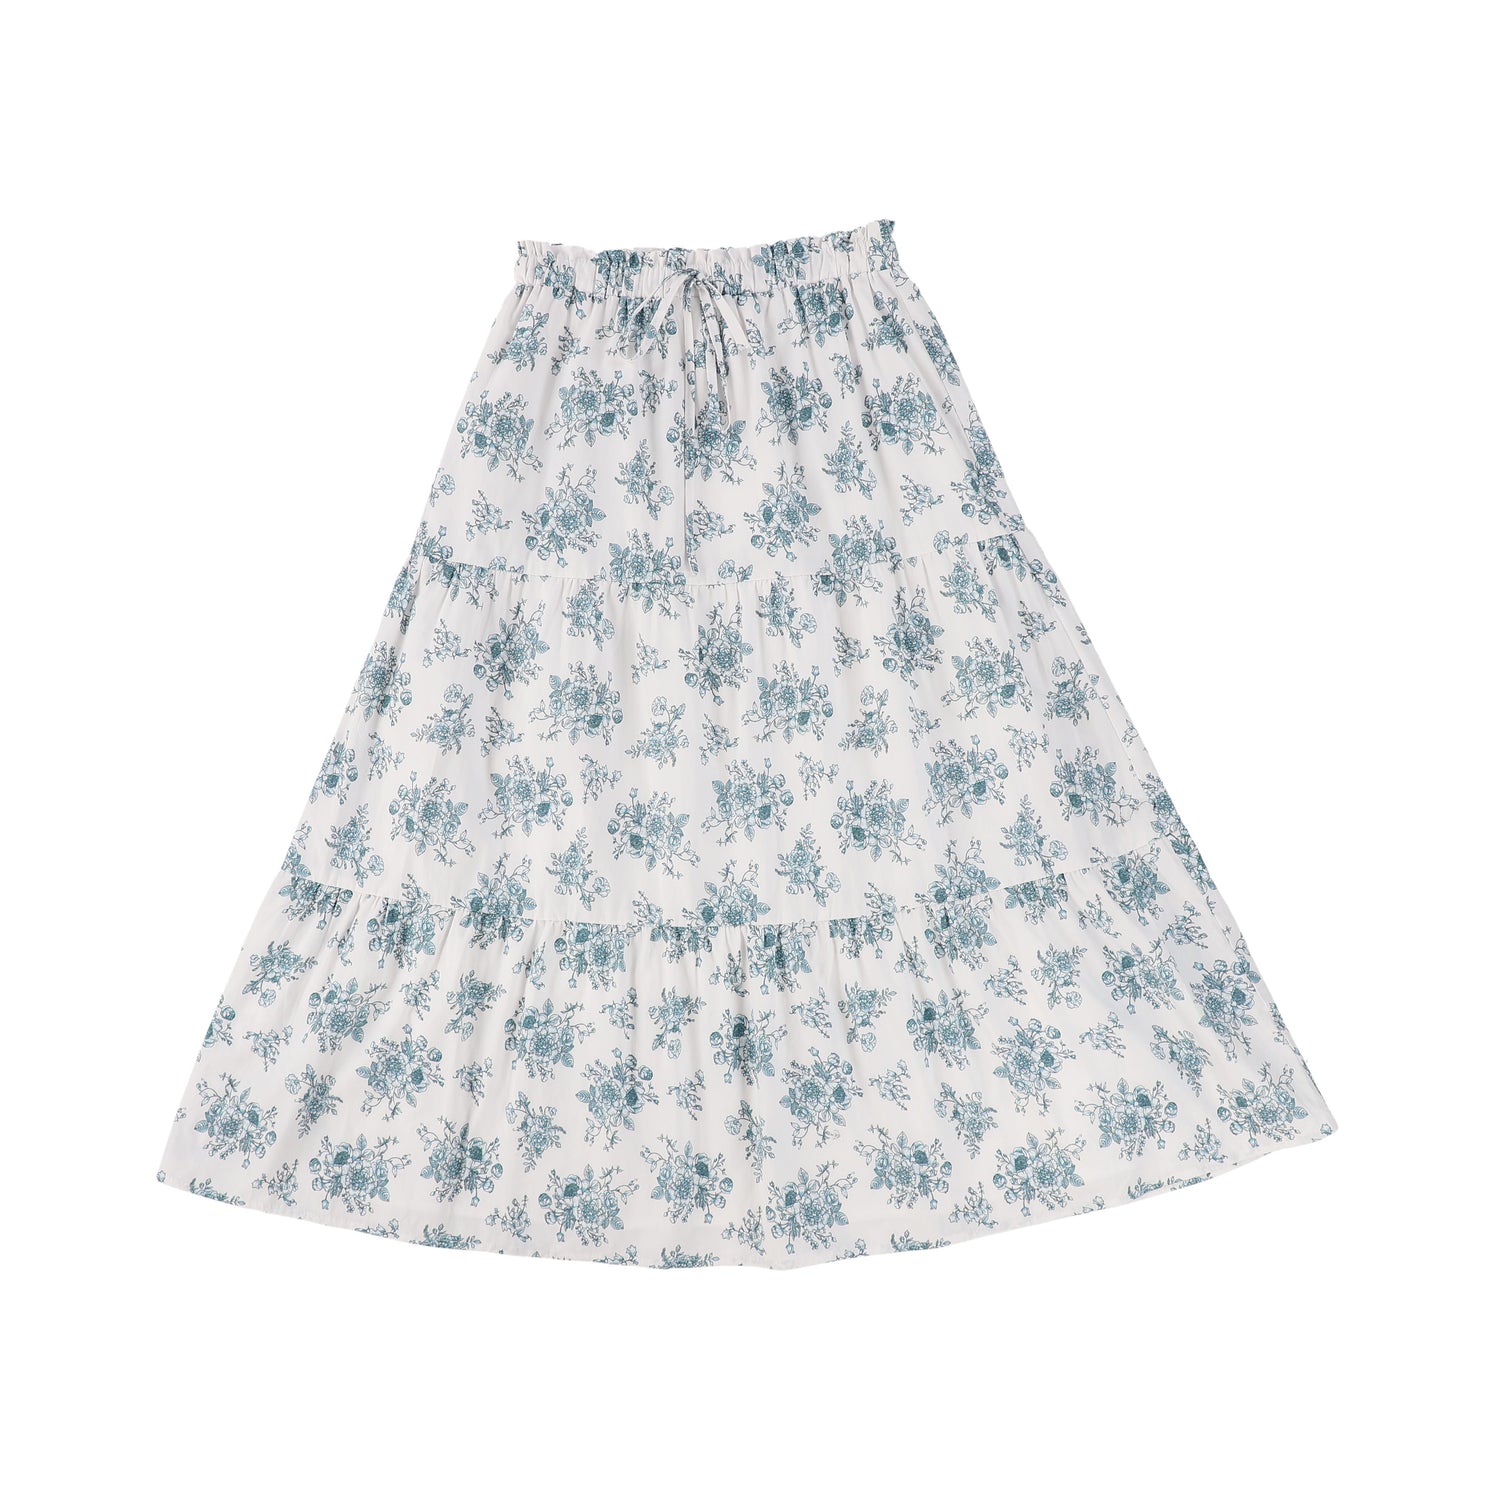 Bamboo Blue Floral Print Skirt